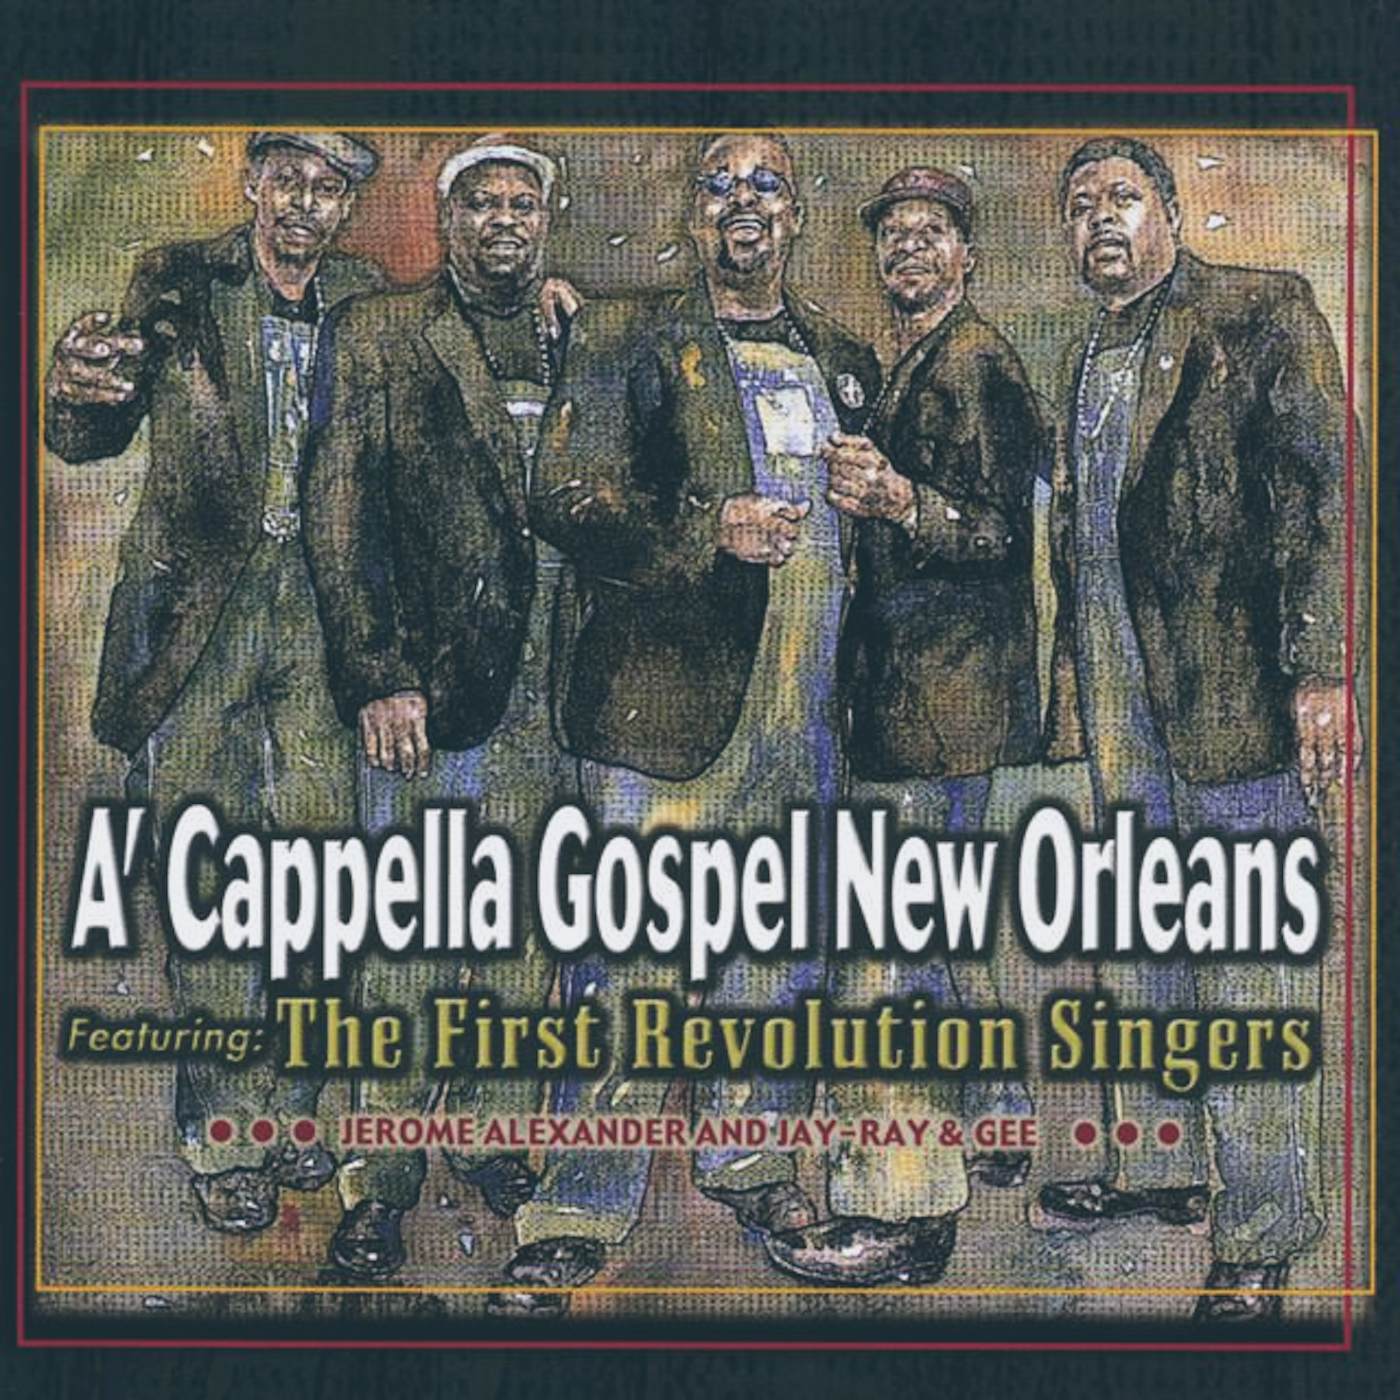 First Revolution Singers